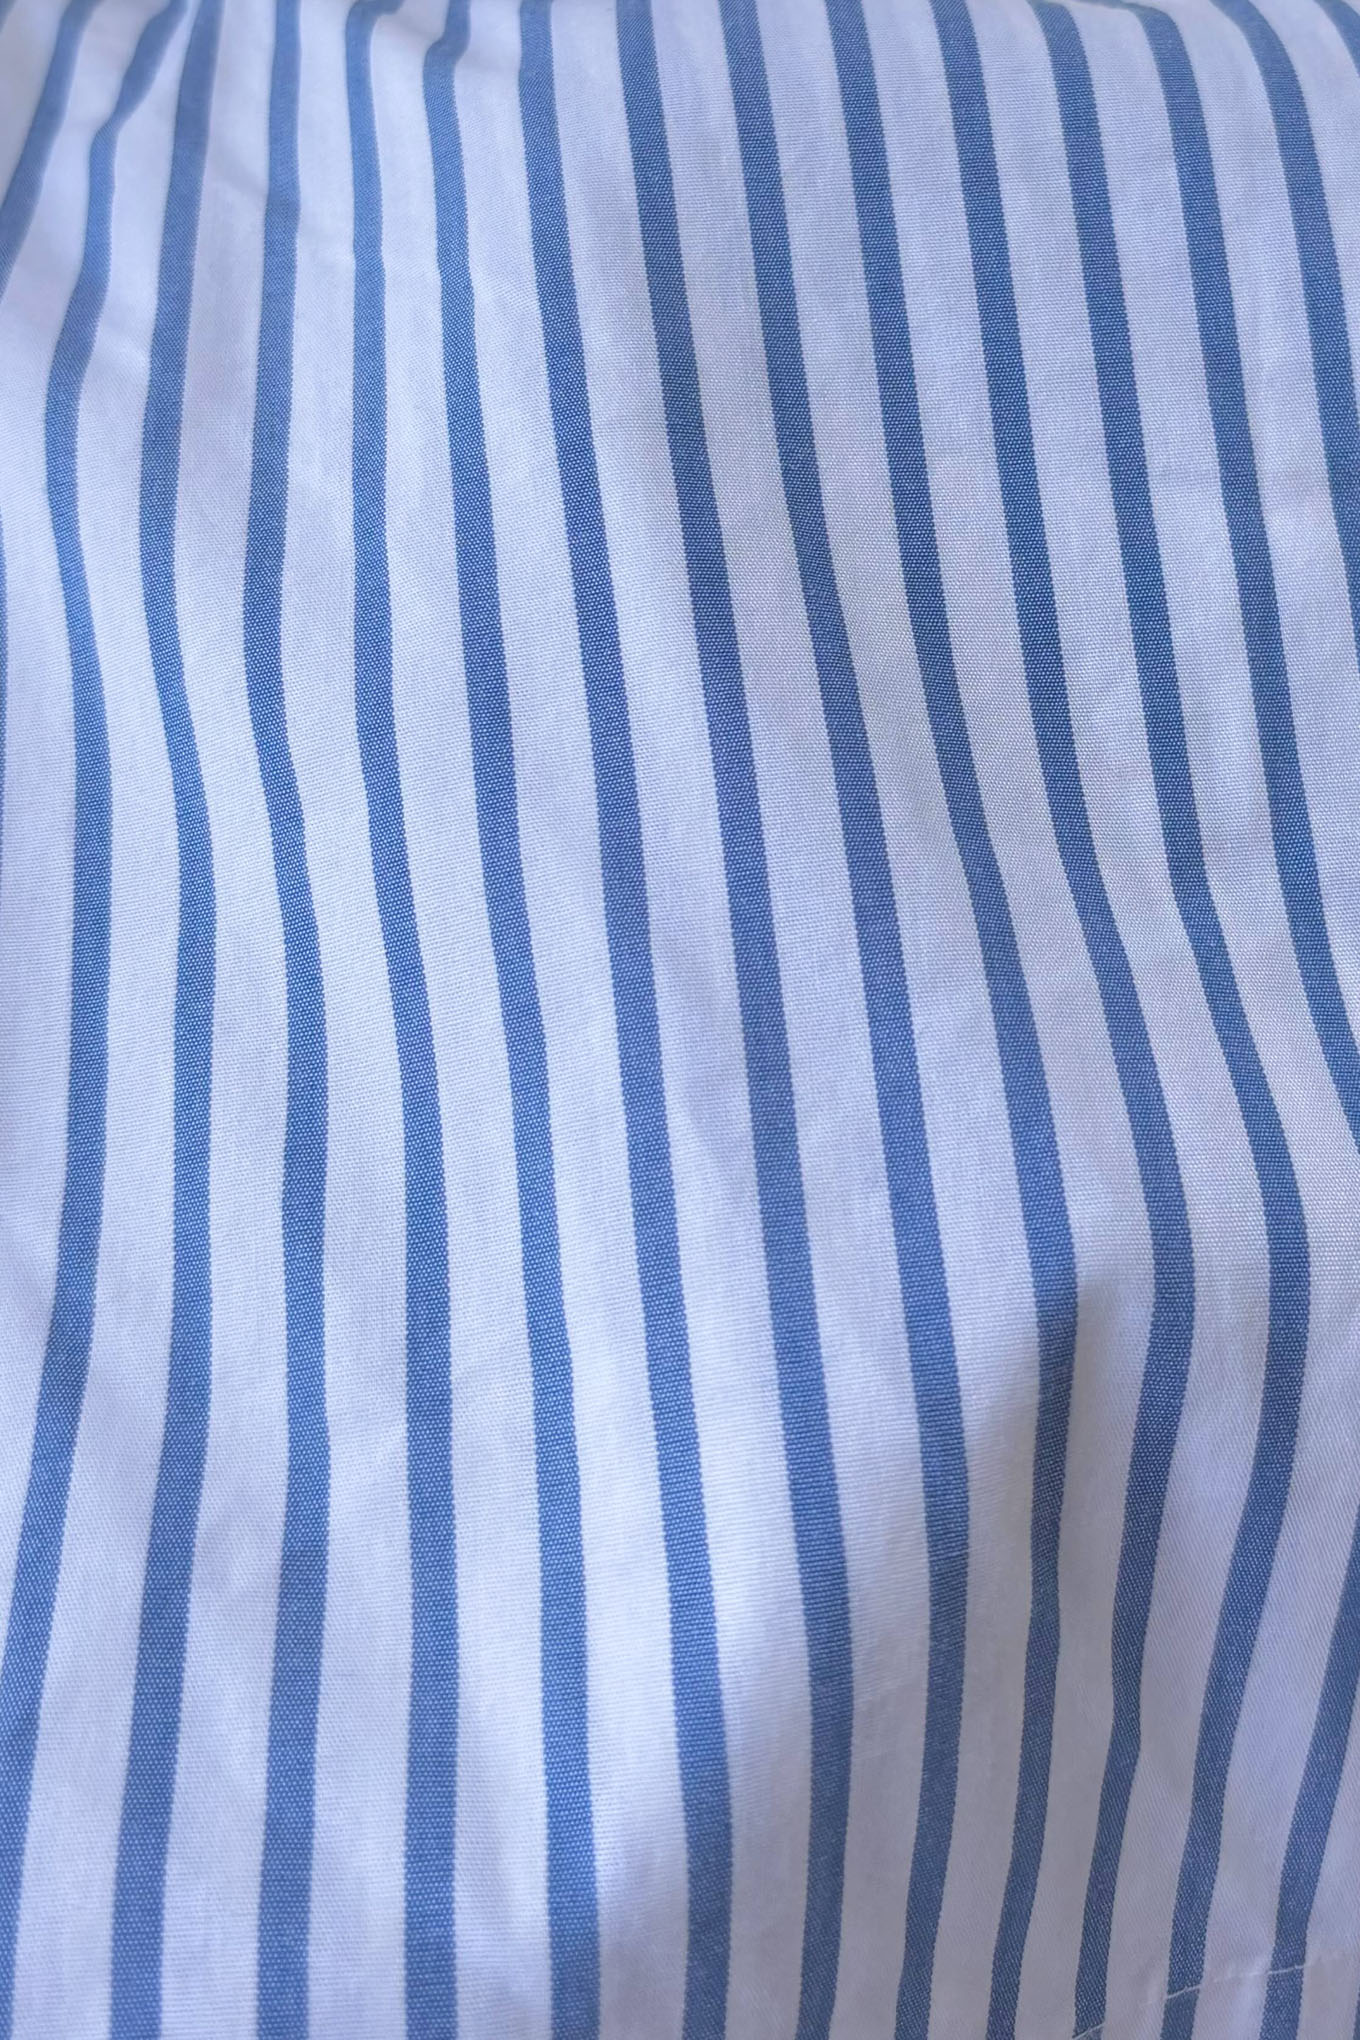 Striped Midi with Pockets